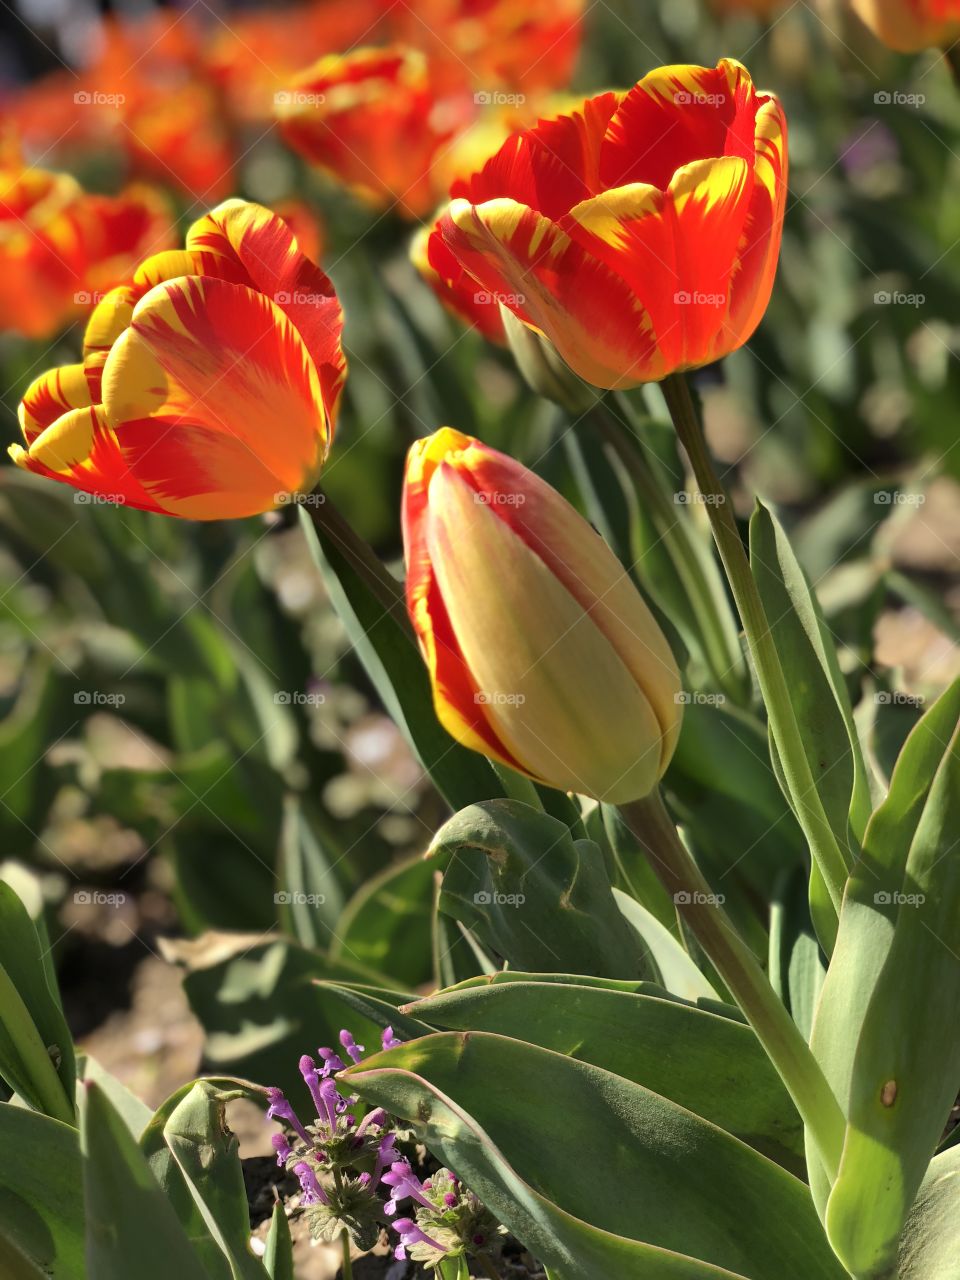 Tulips at Washington D.C 💐